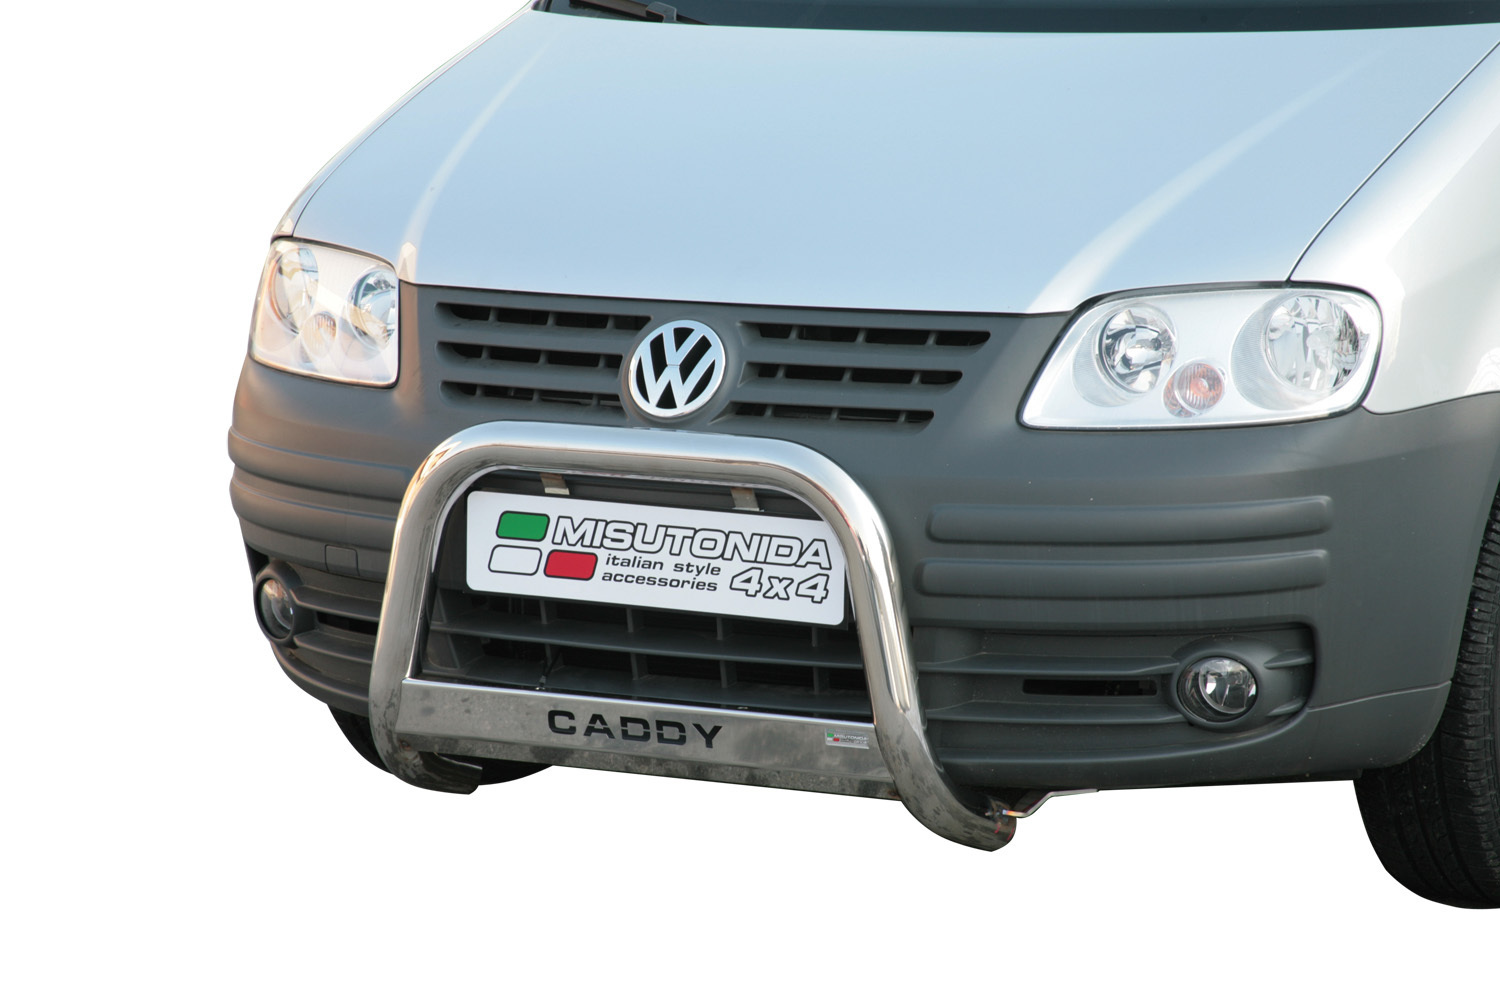 VW Caddy EU-Front guard 2004-2010 (Misutonida)